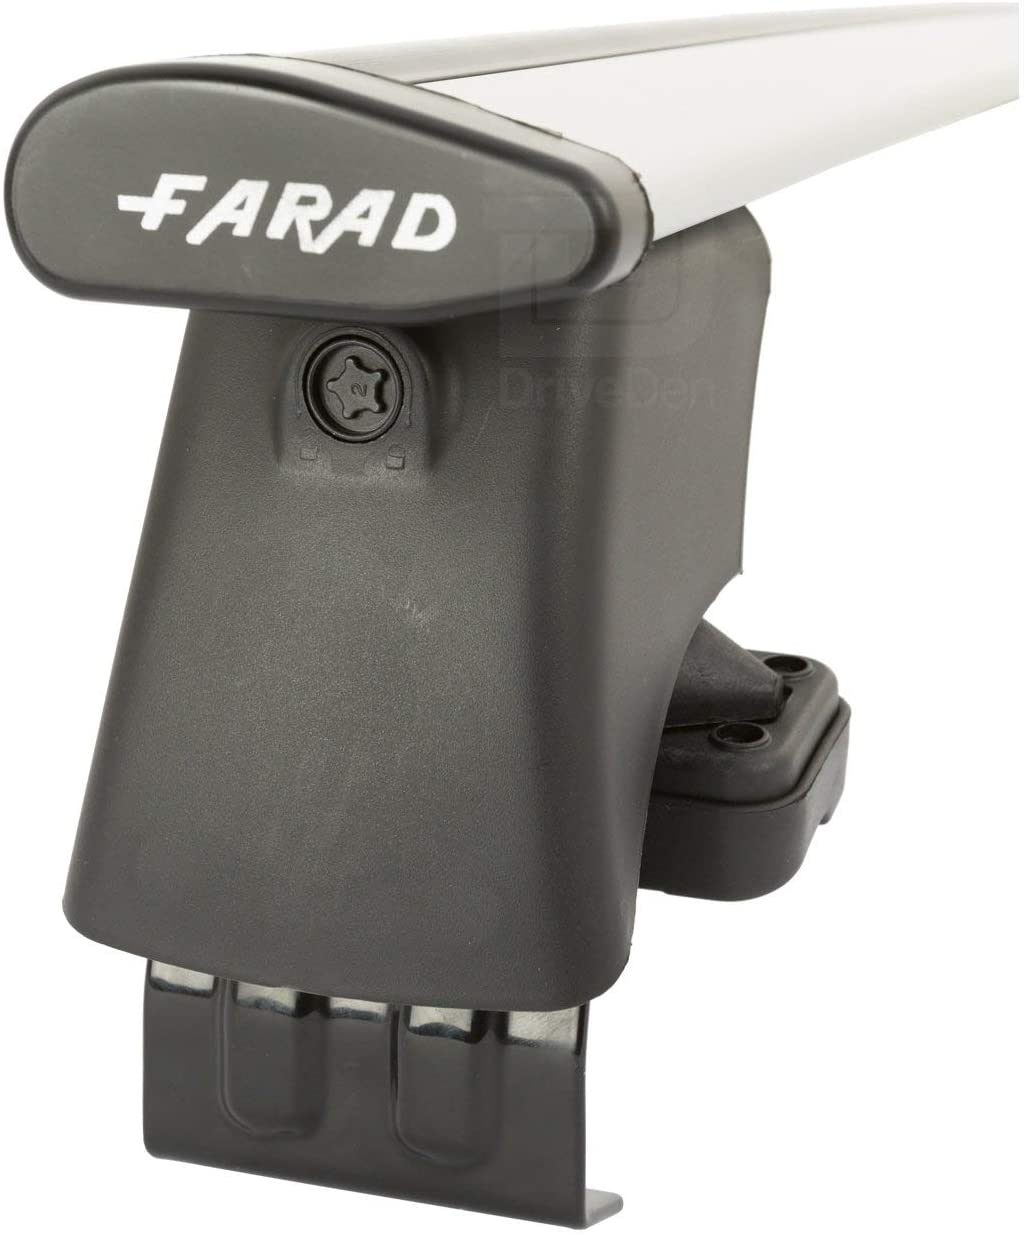 FARAD-Kit H2 per barre portatutto - Volkswagen Passat 2005-2010 (senza corrimano)